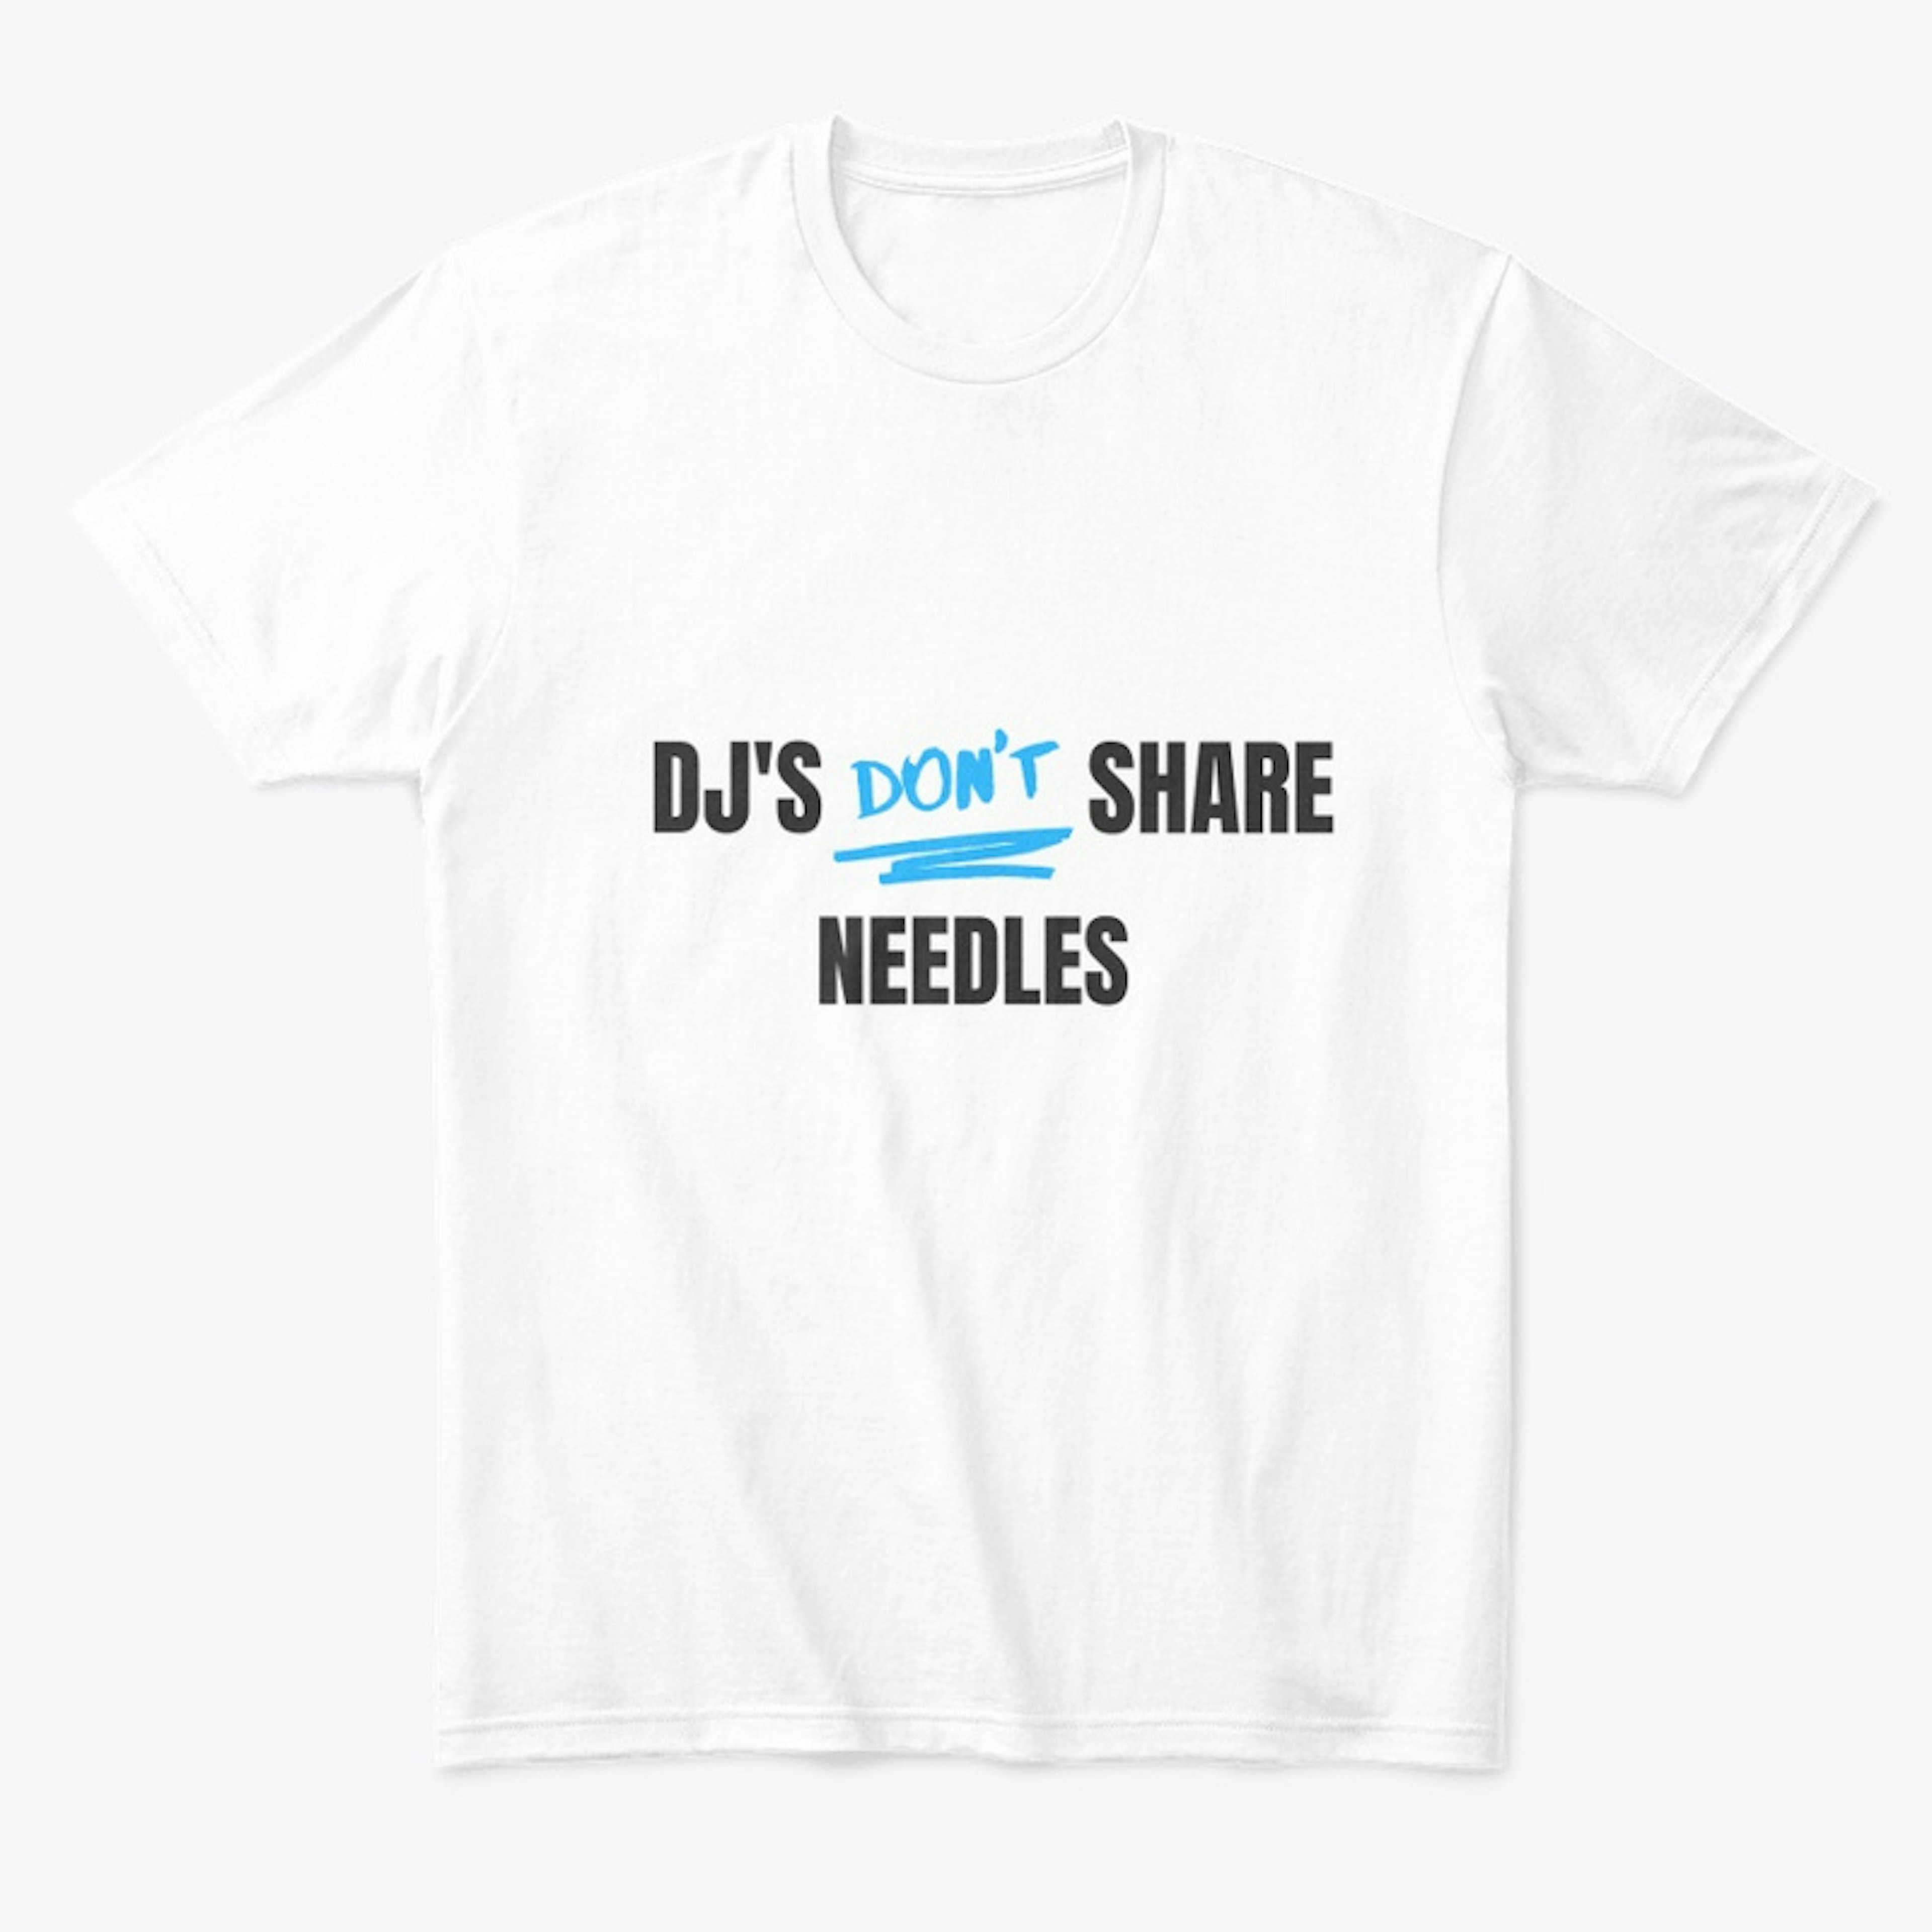 DJs don't share needles 